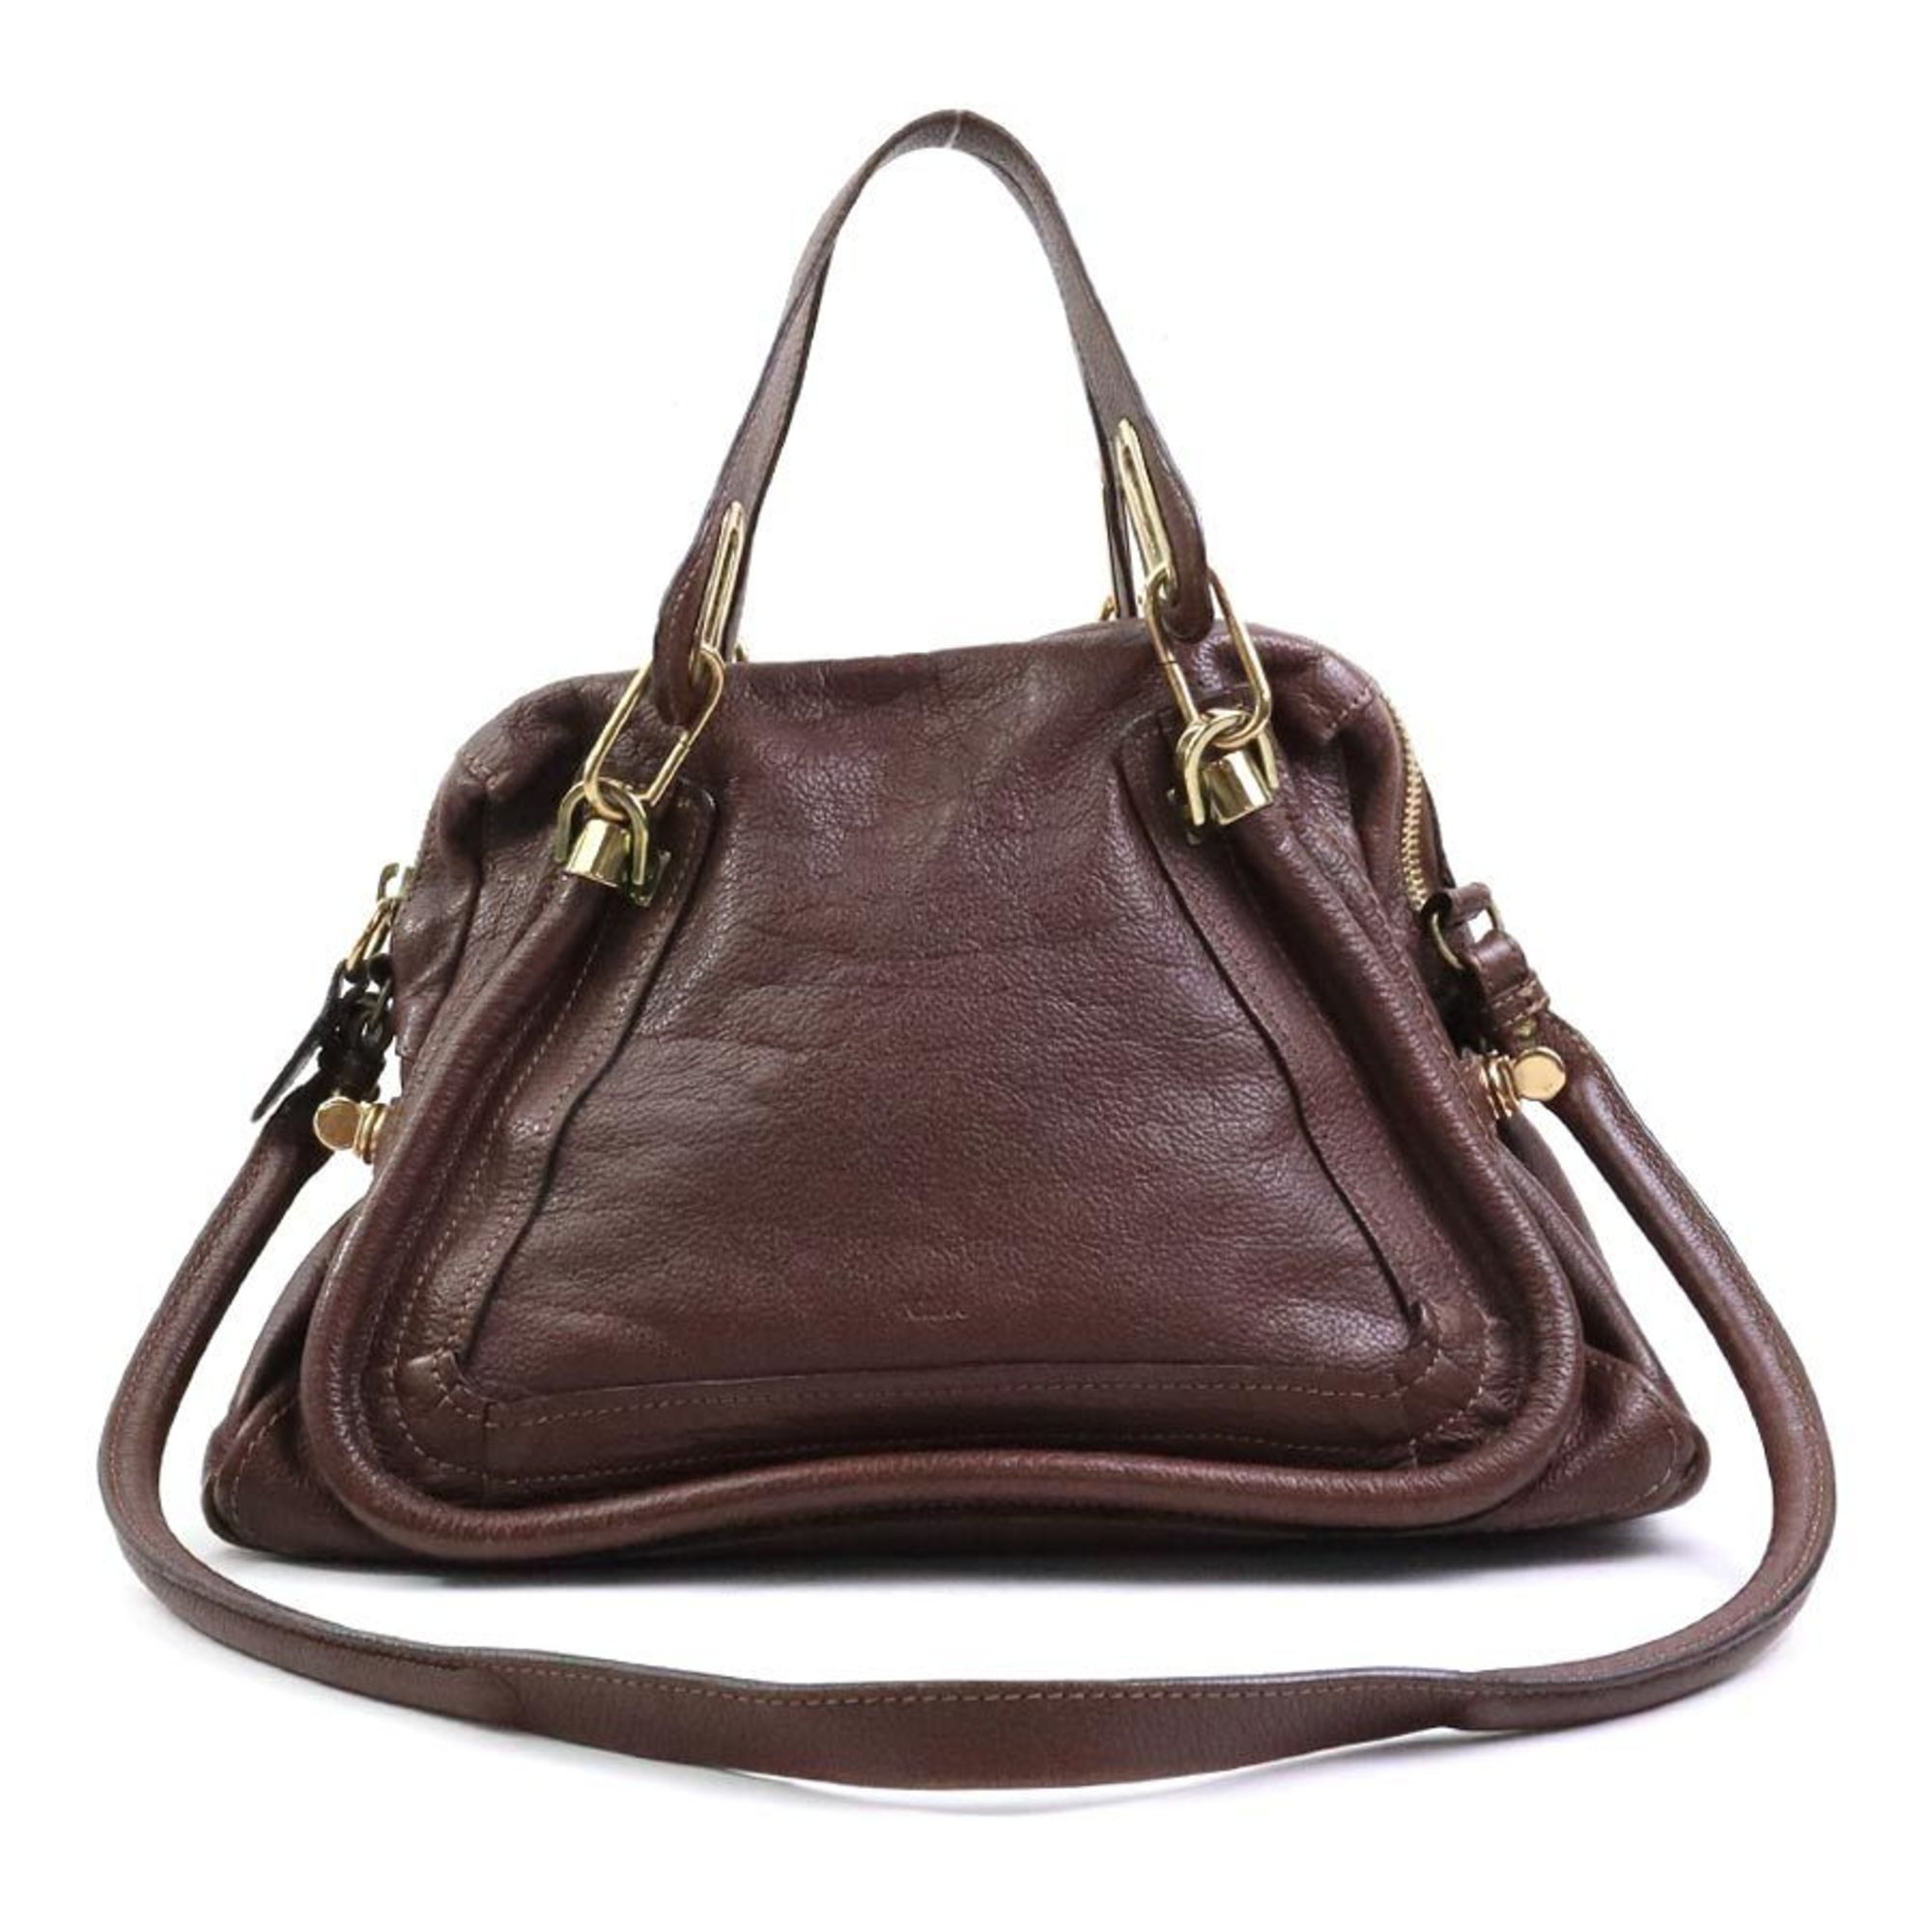 Chloé Chloe handbag shoulder bag Paraty leather brown gold ladies e58758k